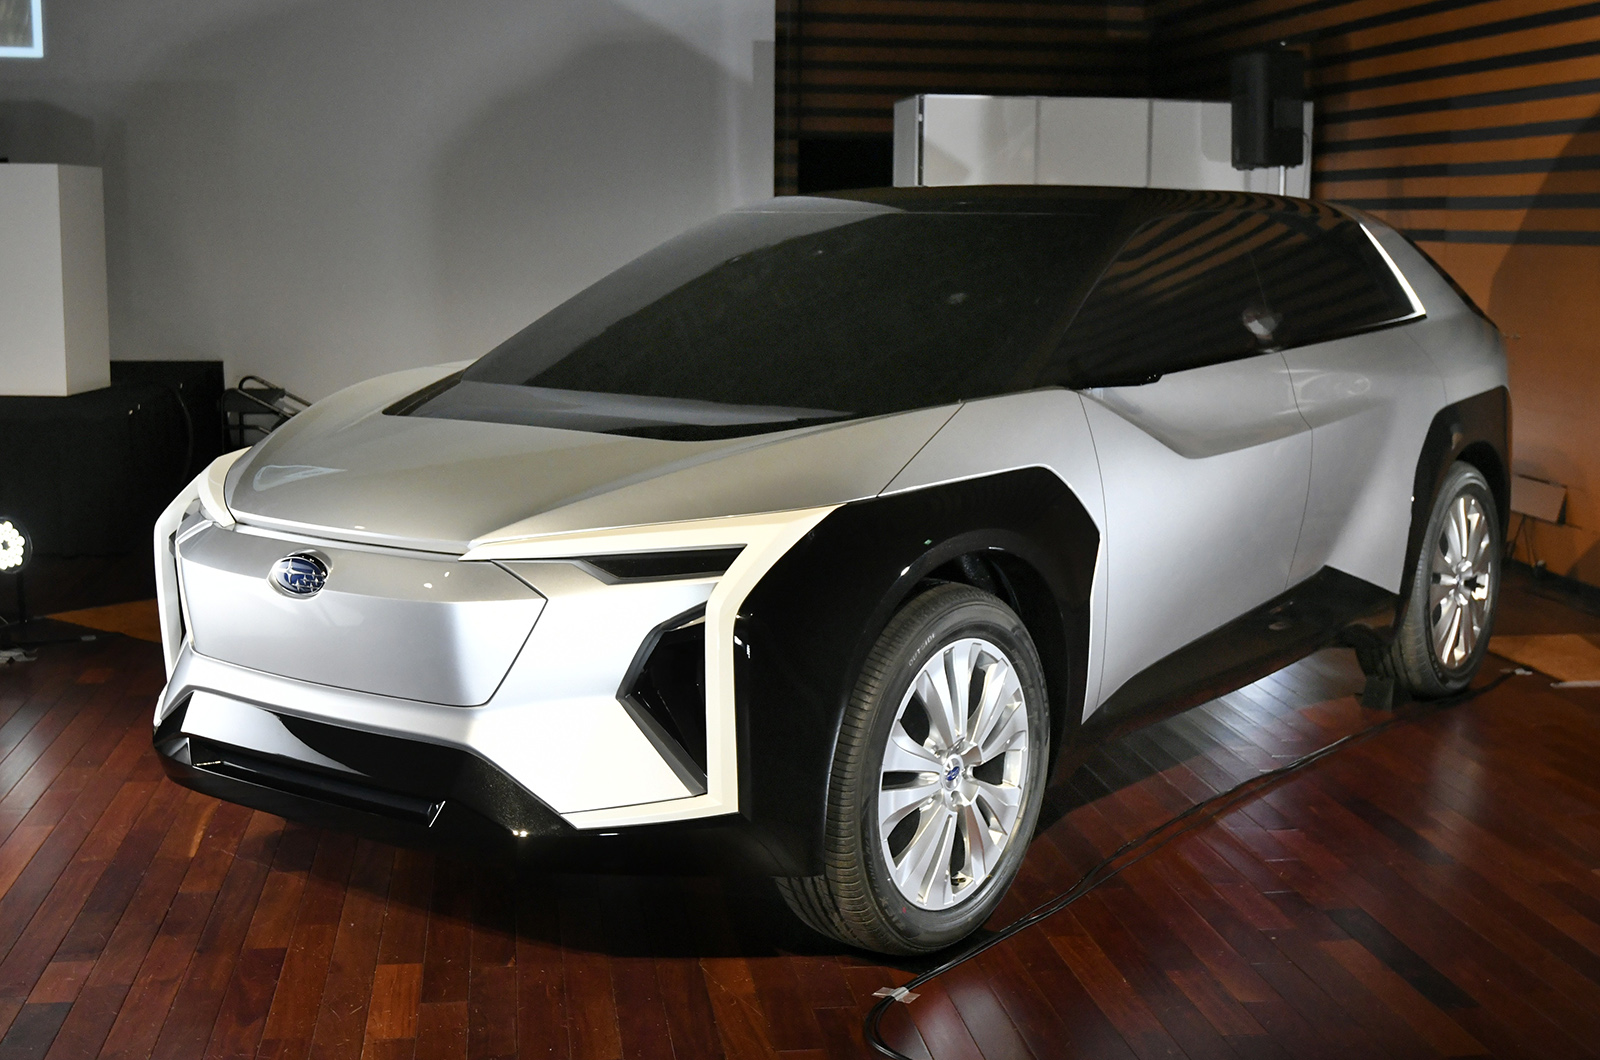 Subaru Solterra due in 2022 as firm's first electric car | Autocar